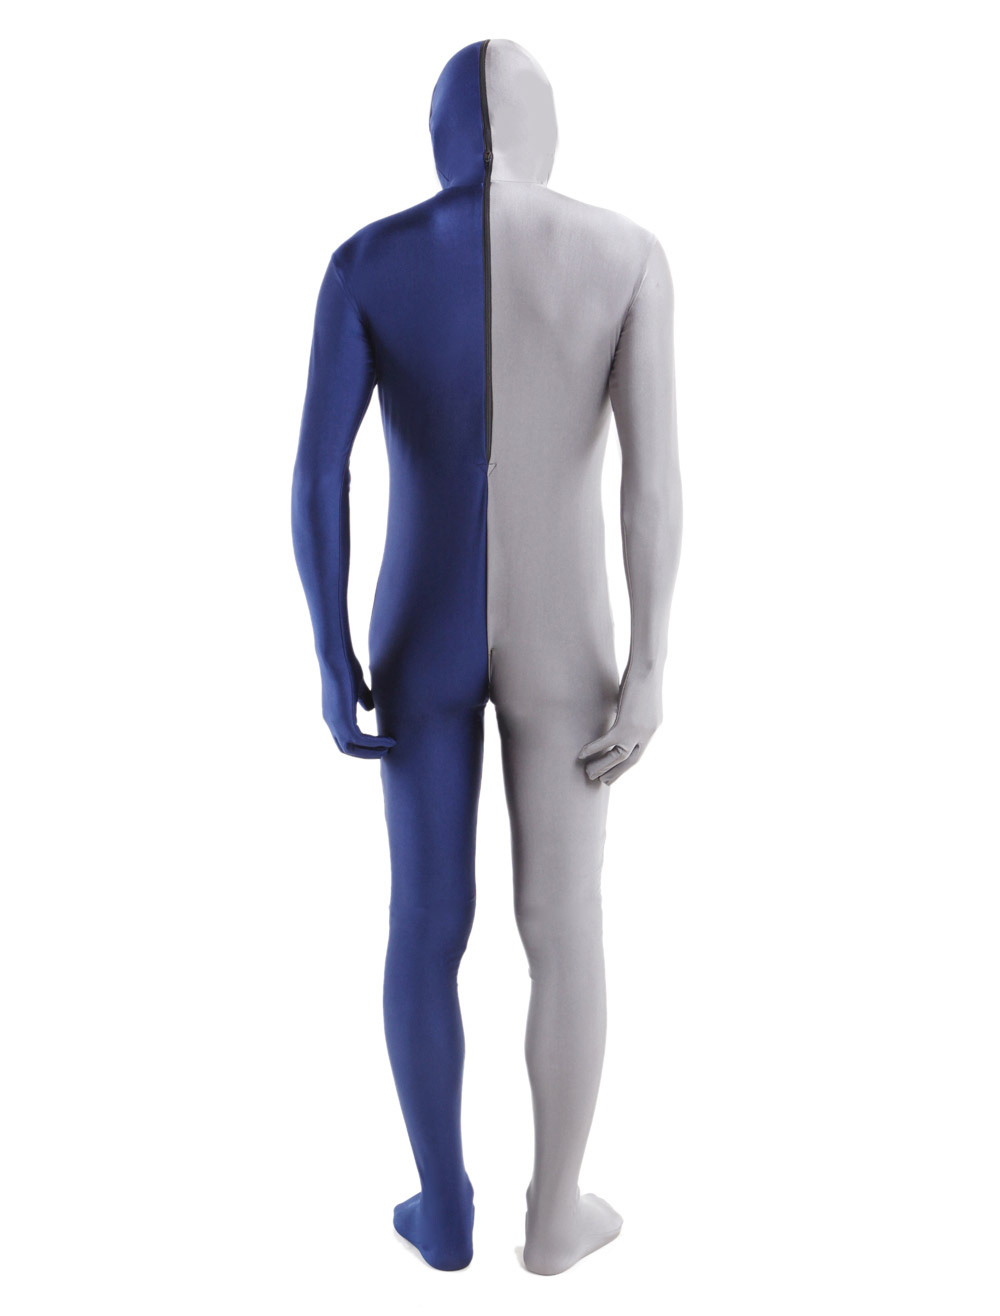 Vêtement De Zentai Beau Combinaison Enveloppé Unisexe En Lycra Spandex Bleu Marine Et Girs 6148